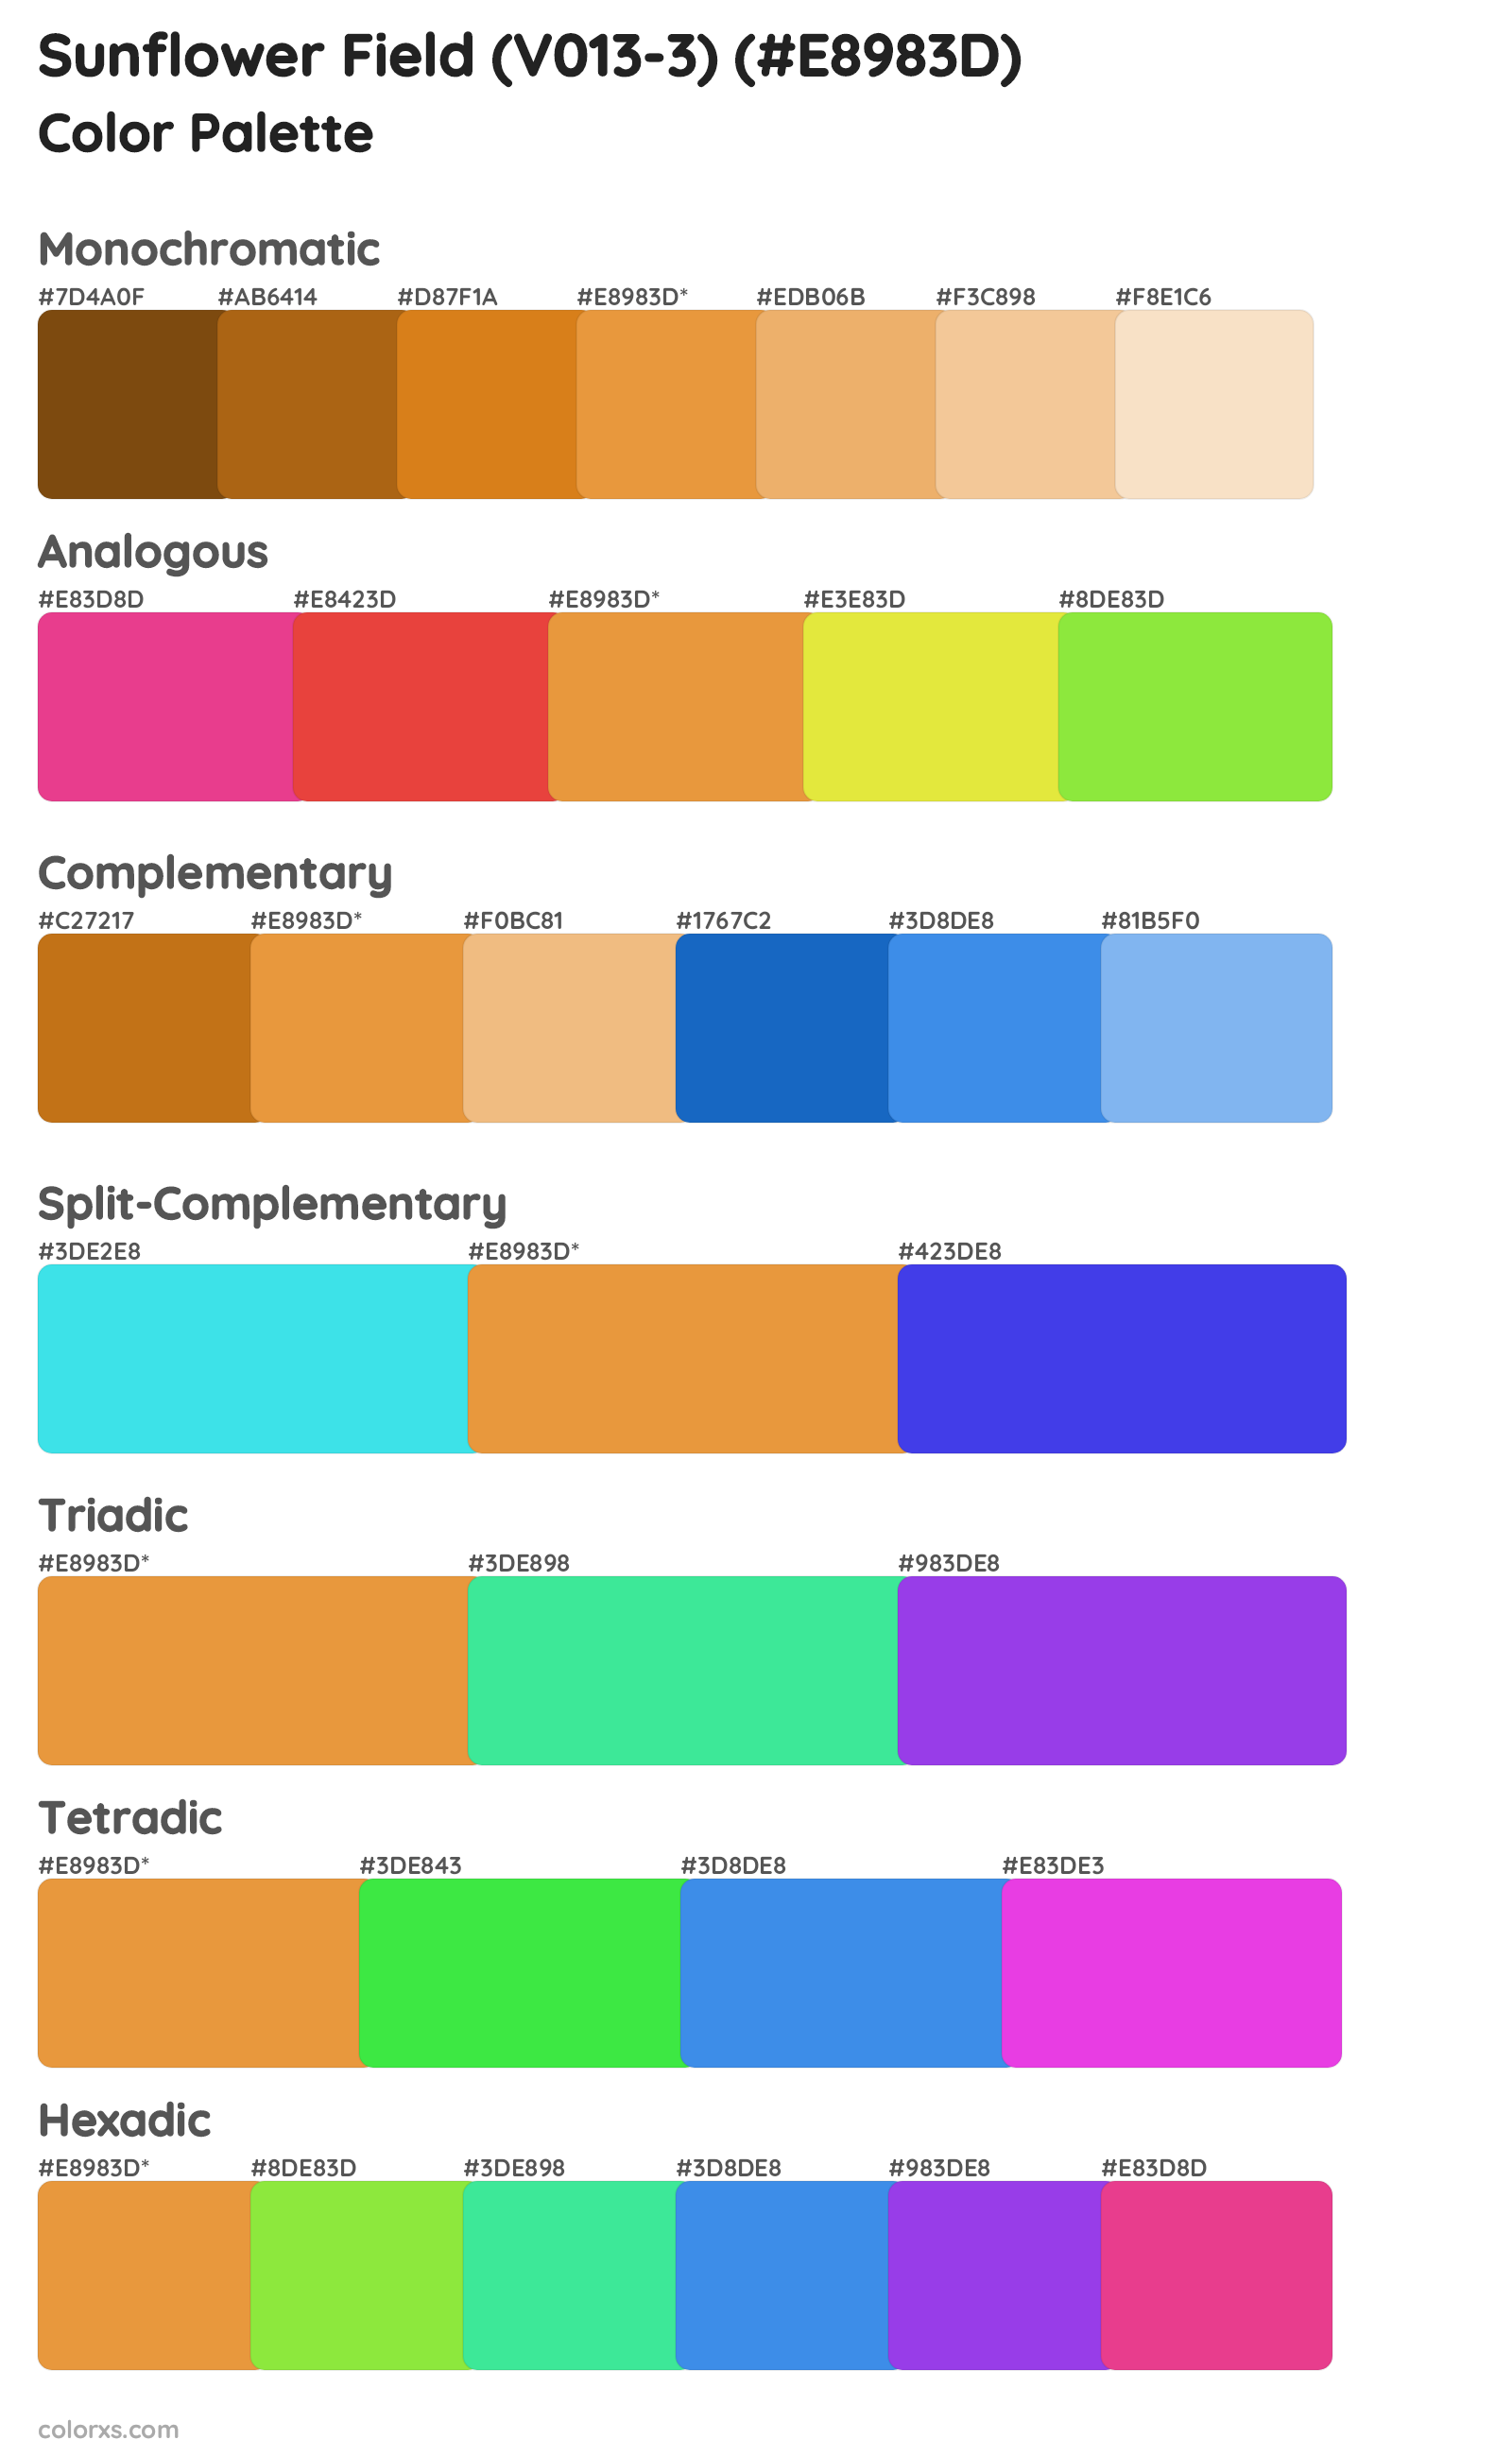 Sunflower Field (V013-3) Color Scheme Palettes